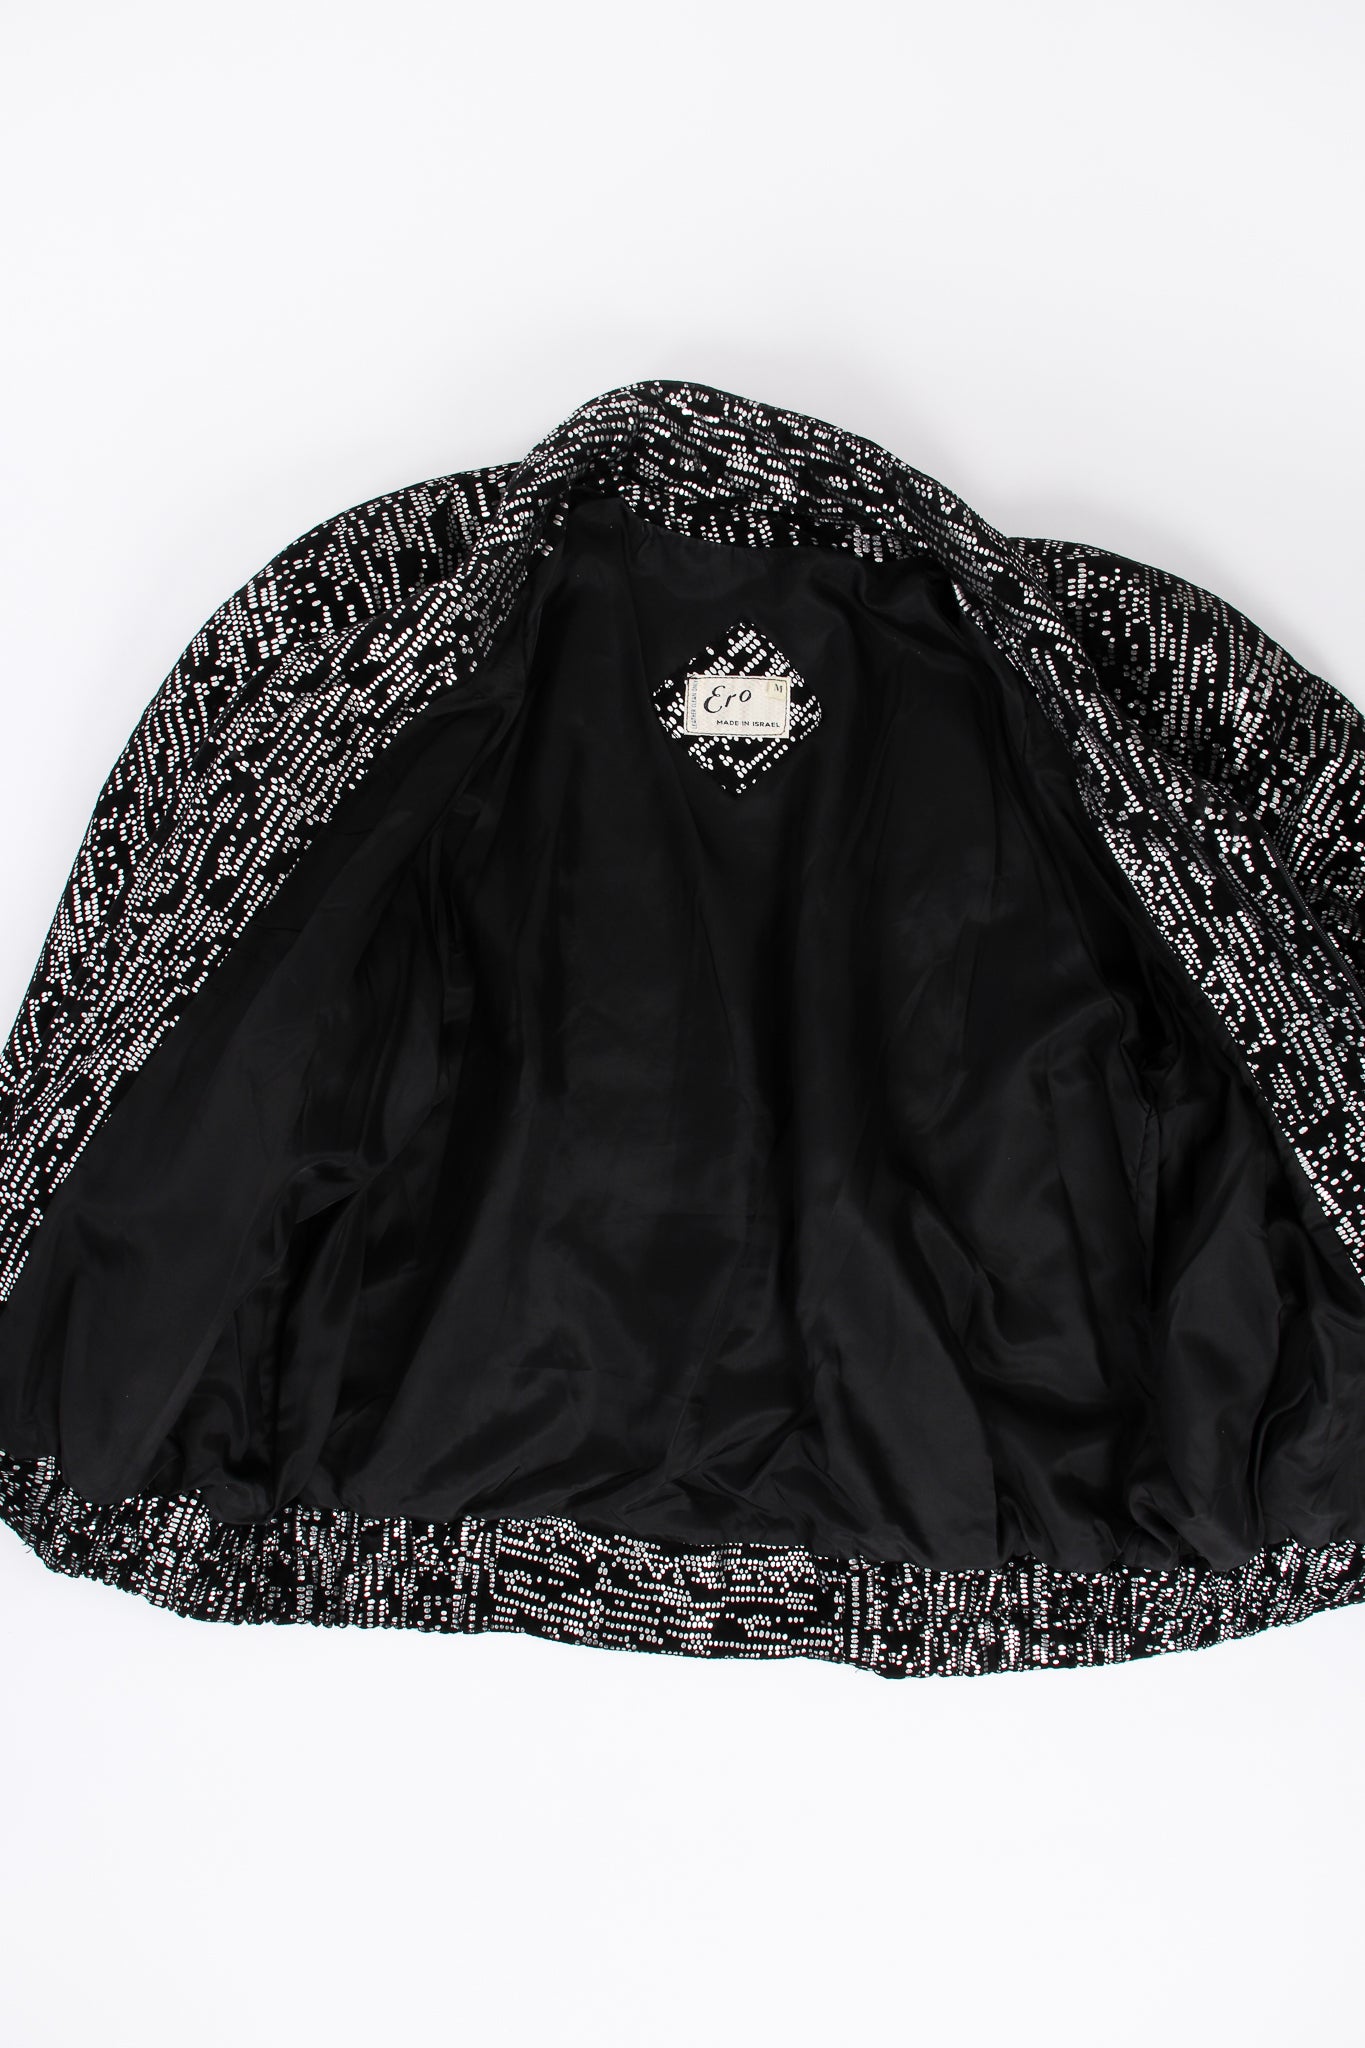 Vintage Ero Foiled Suede Bomber Jacket & Pant Set jacket lining at Recess LA